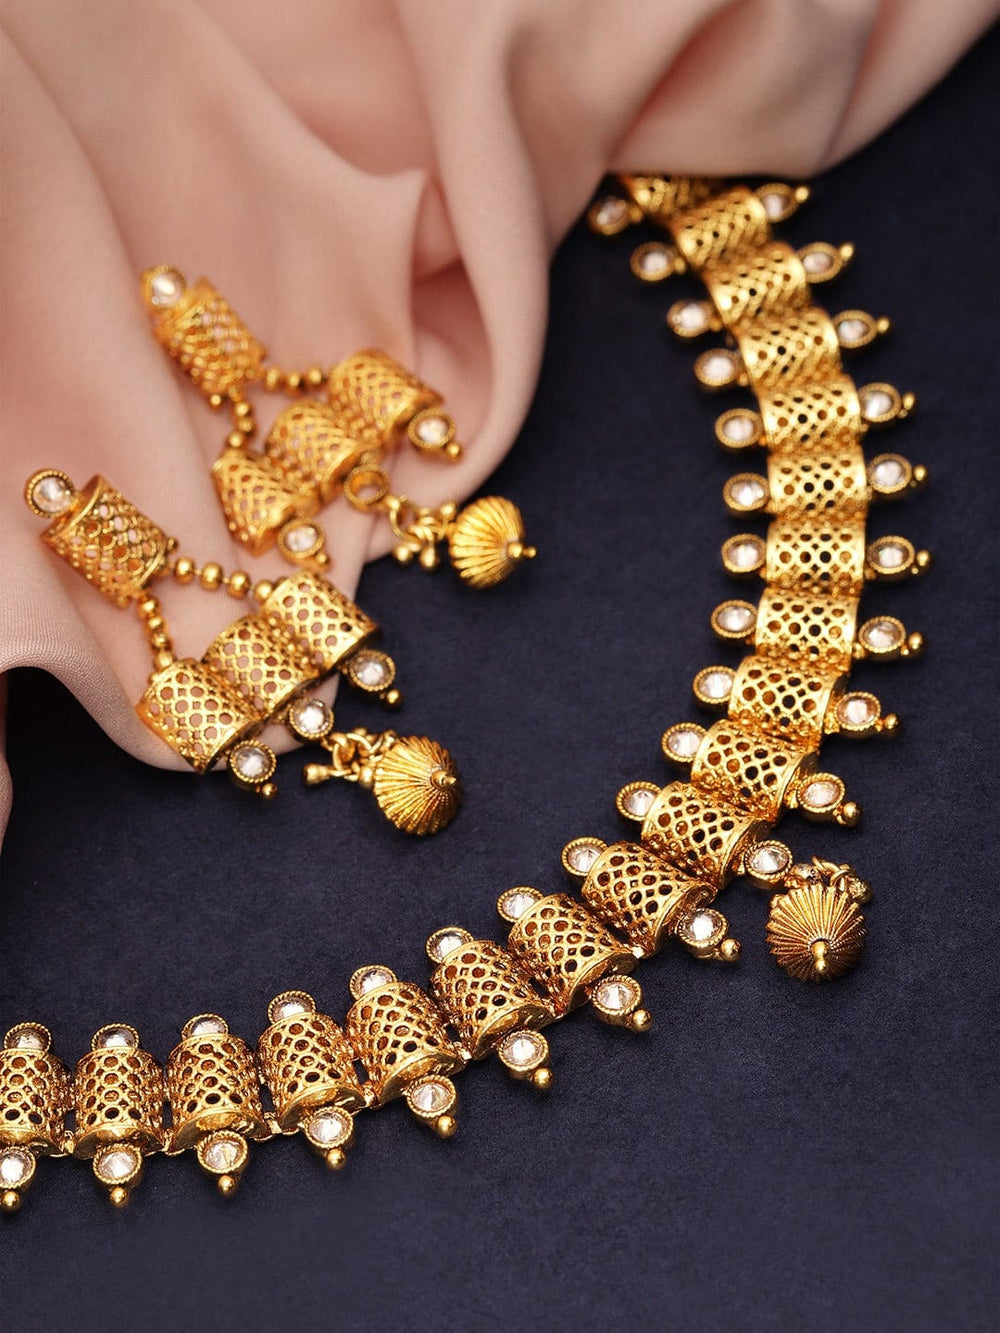 Rubans Women Gold-Plated & White Stone Embellished Handcrafted Filigree Jewellery Set Necklace Set